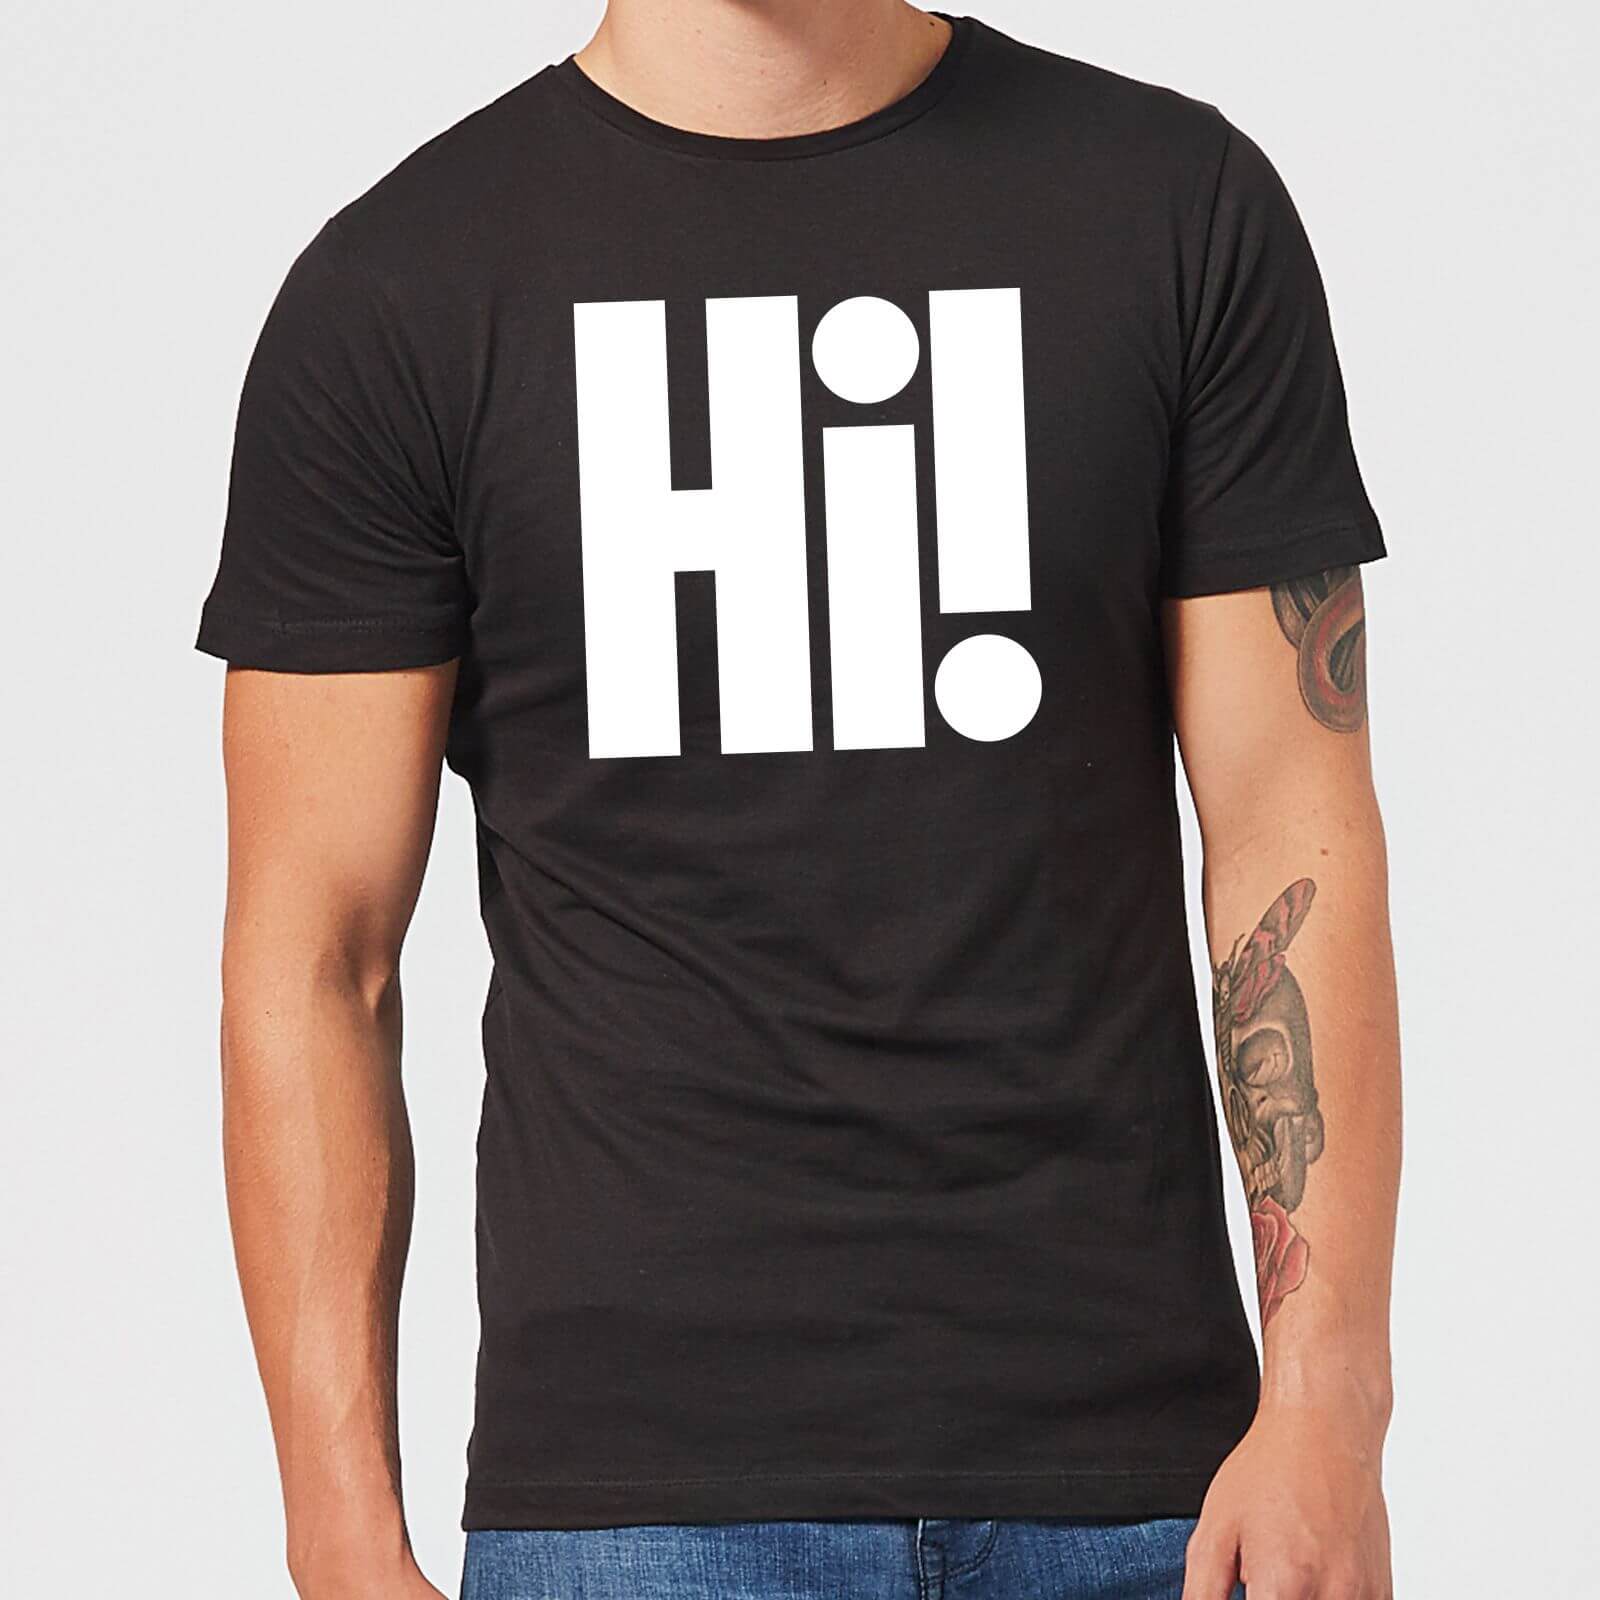 Hi! White Men's T-Shirt - Black - S - Black